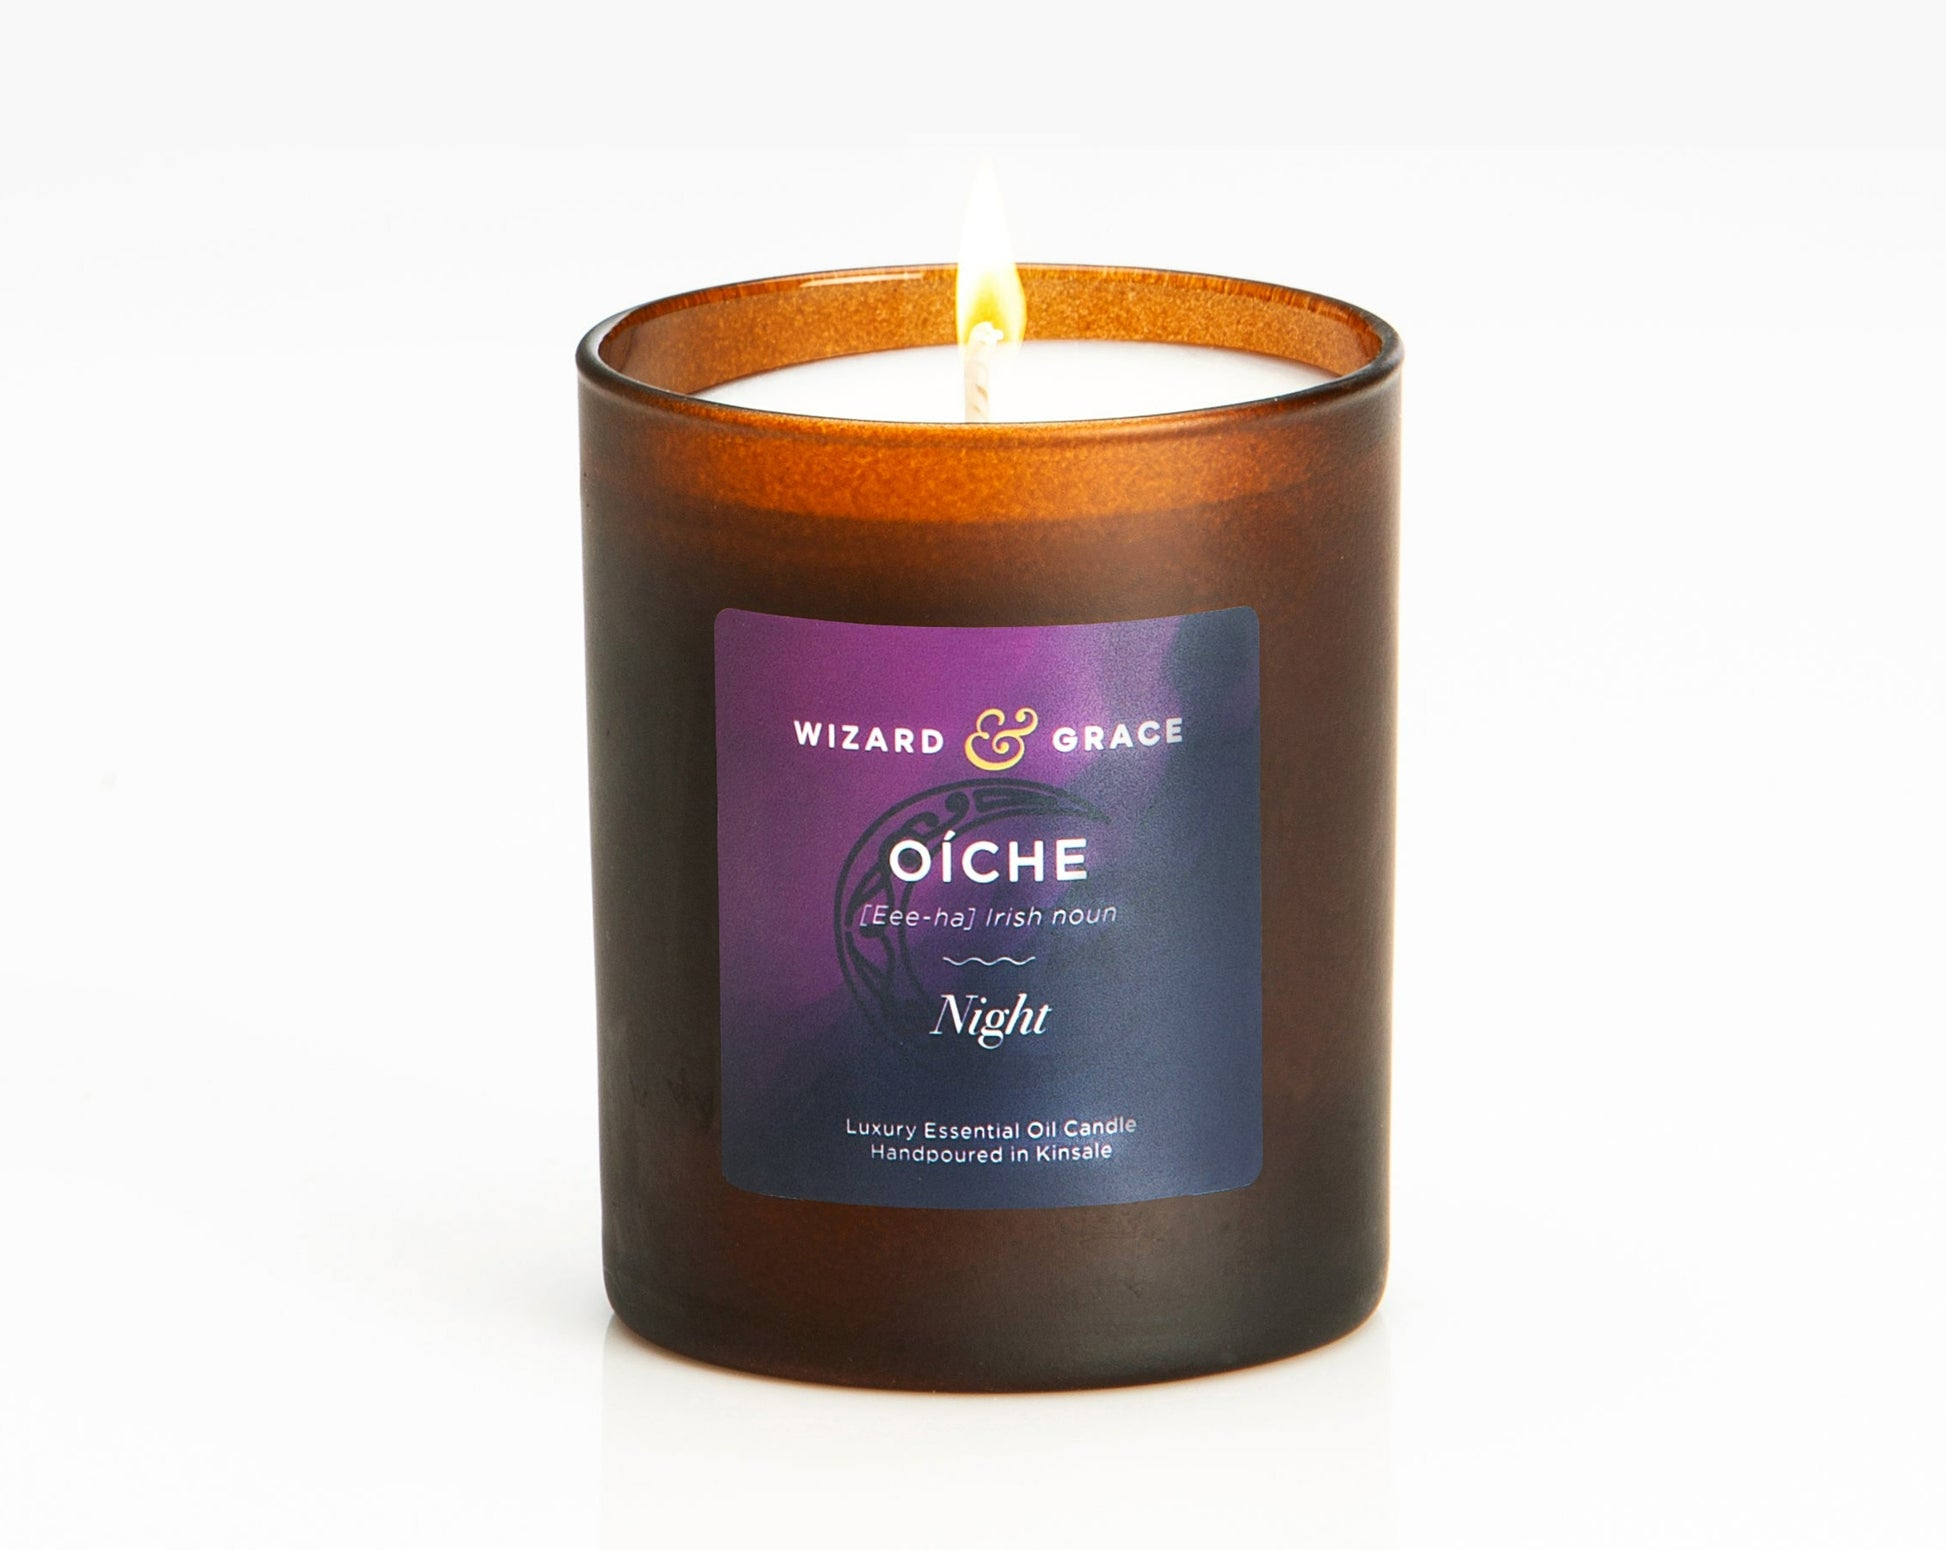 Oiche (night) Essential Oil Candle - Wizard & Grace